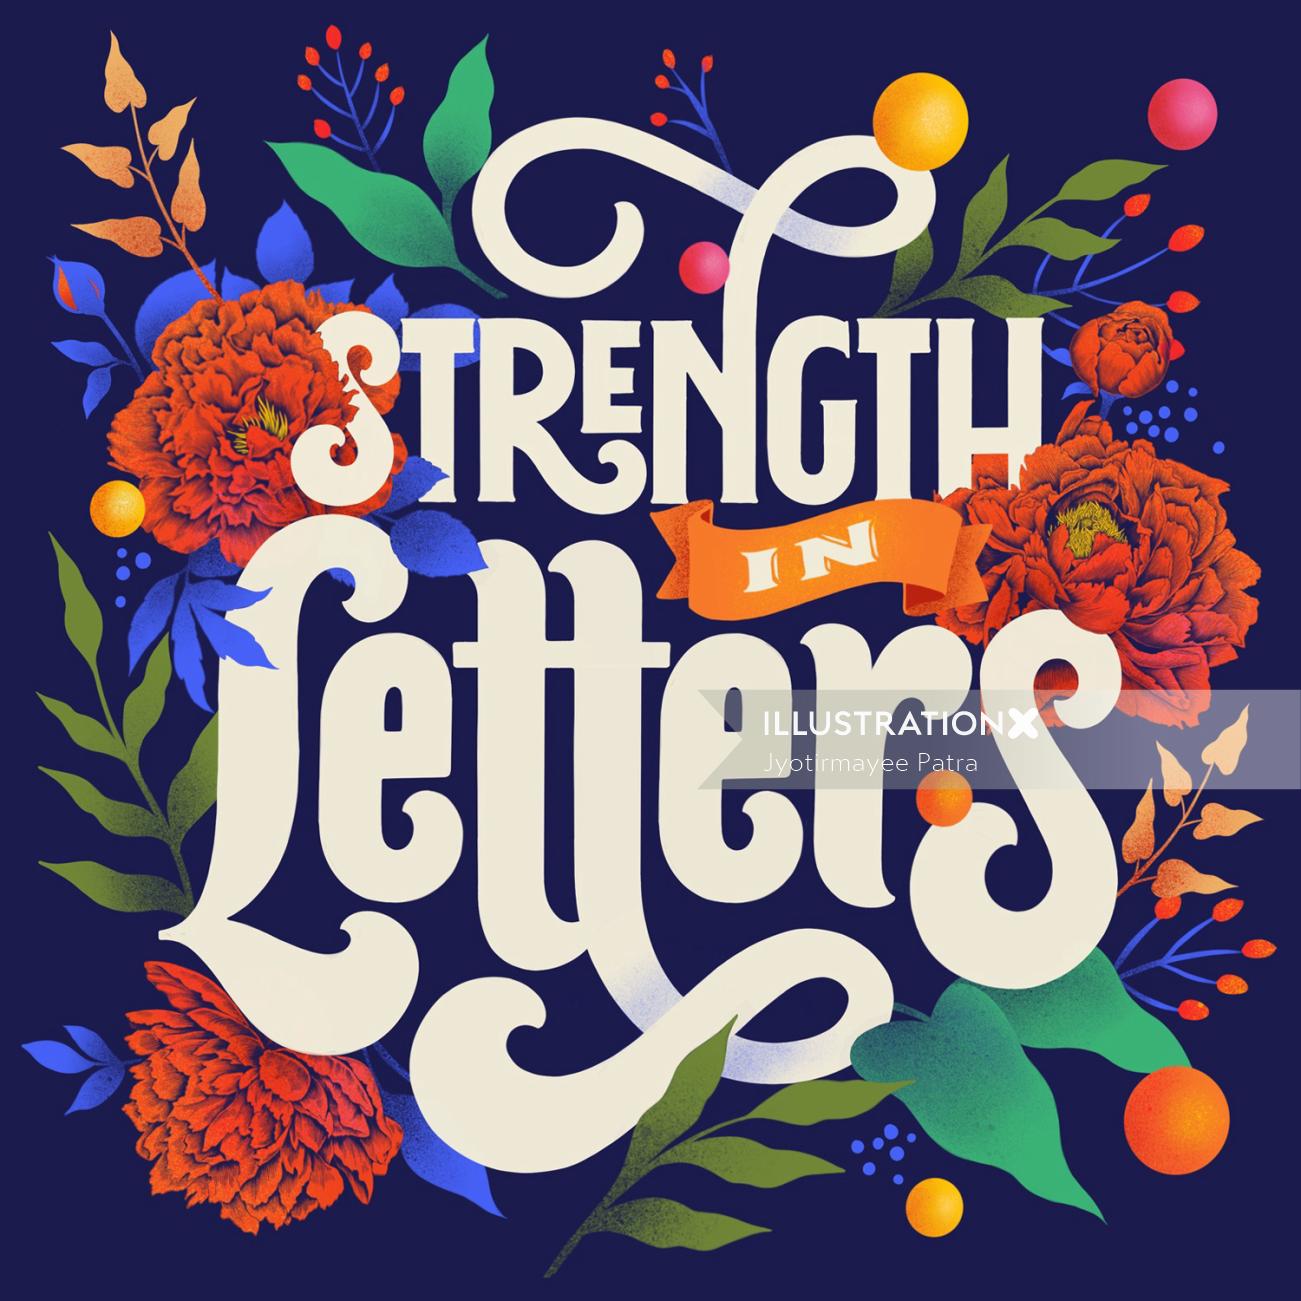 Digital illustration of lettering "Strength in letters"
